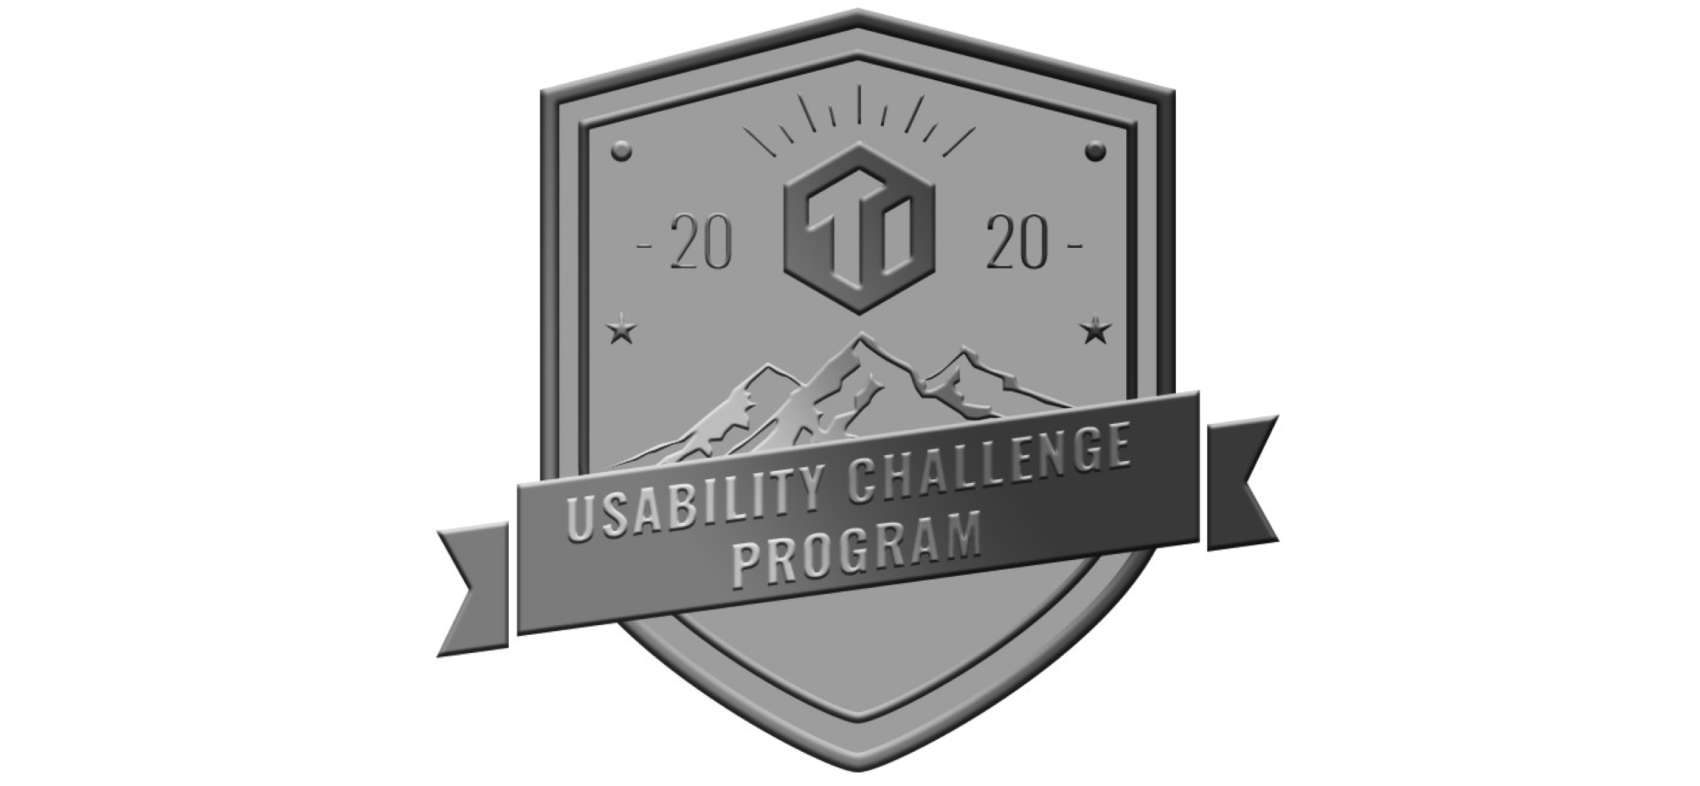 Usability Challenge Program badge